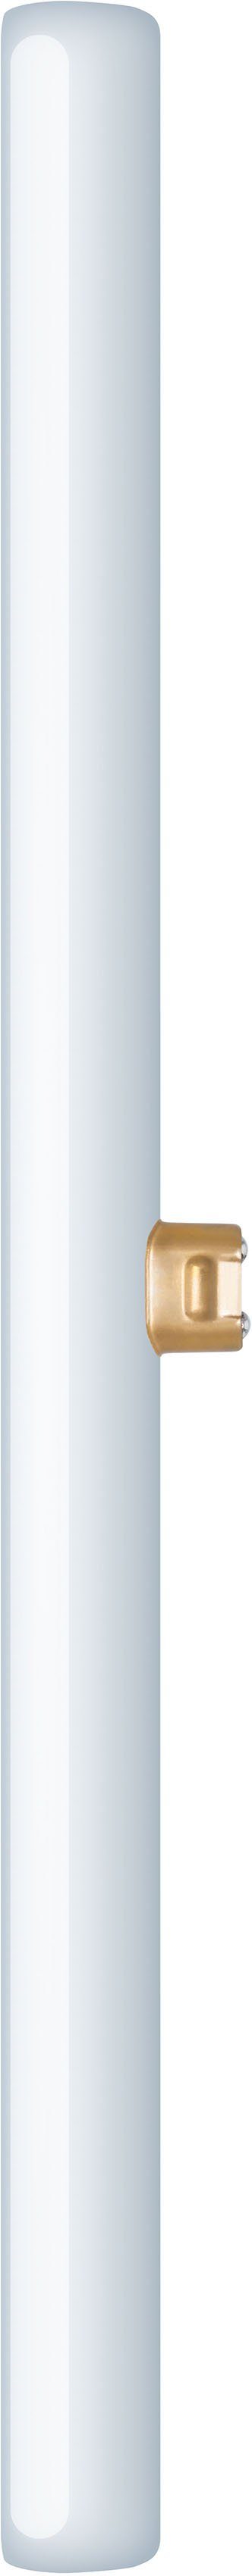 SEGULA LED-Leuchtmittel LED Linienlampe S14d 500mm opal, S14d, Warmweiß, dimmbar, Linienlampe, S14d, 500mm, opal